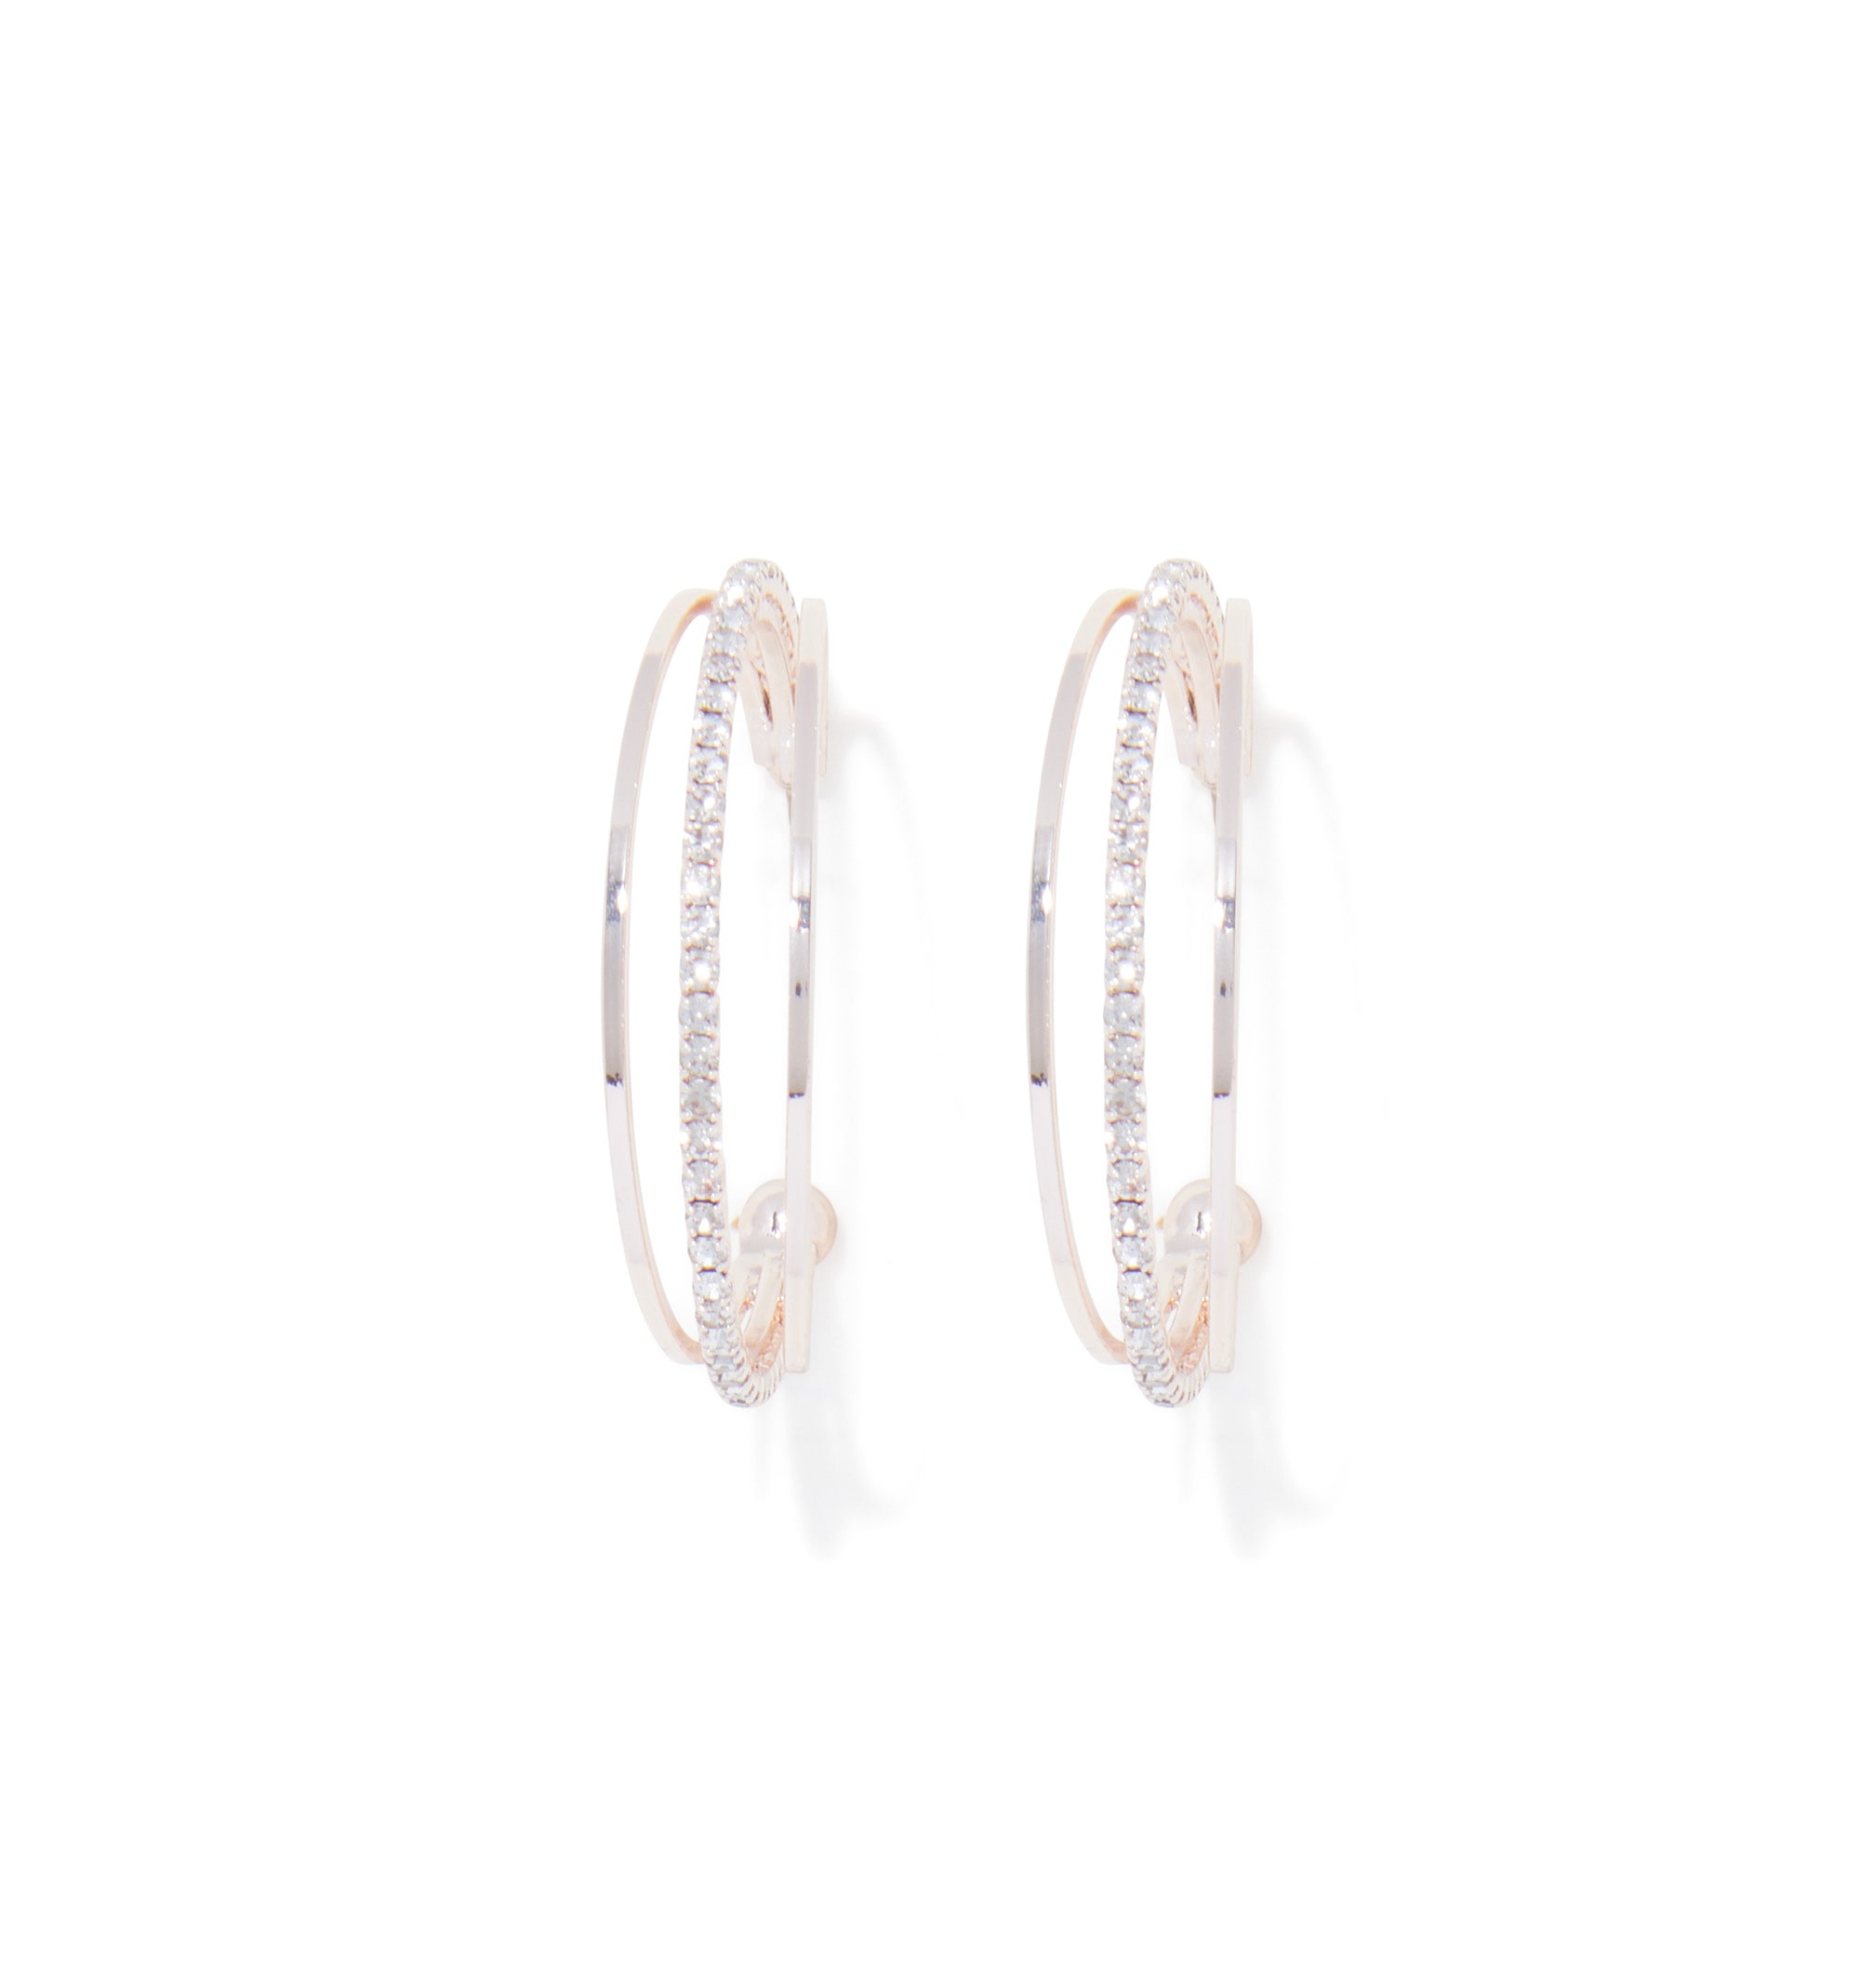 Buy Rose Gold/Crystal Catherine Sparkle Earring Online - Forever New